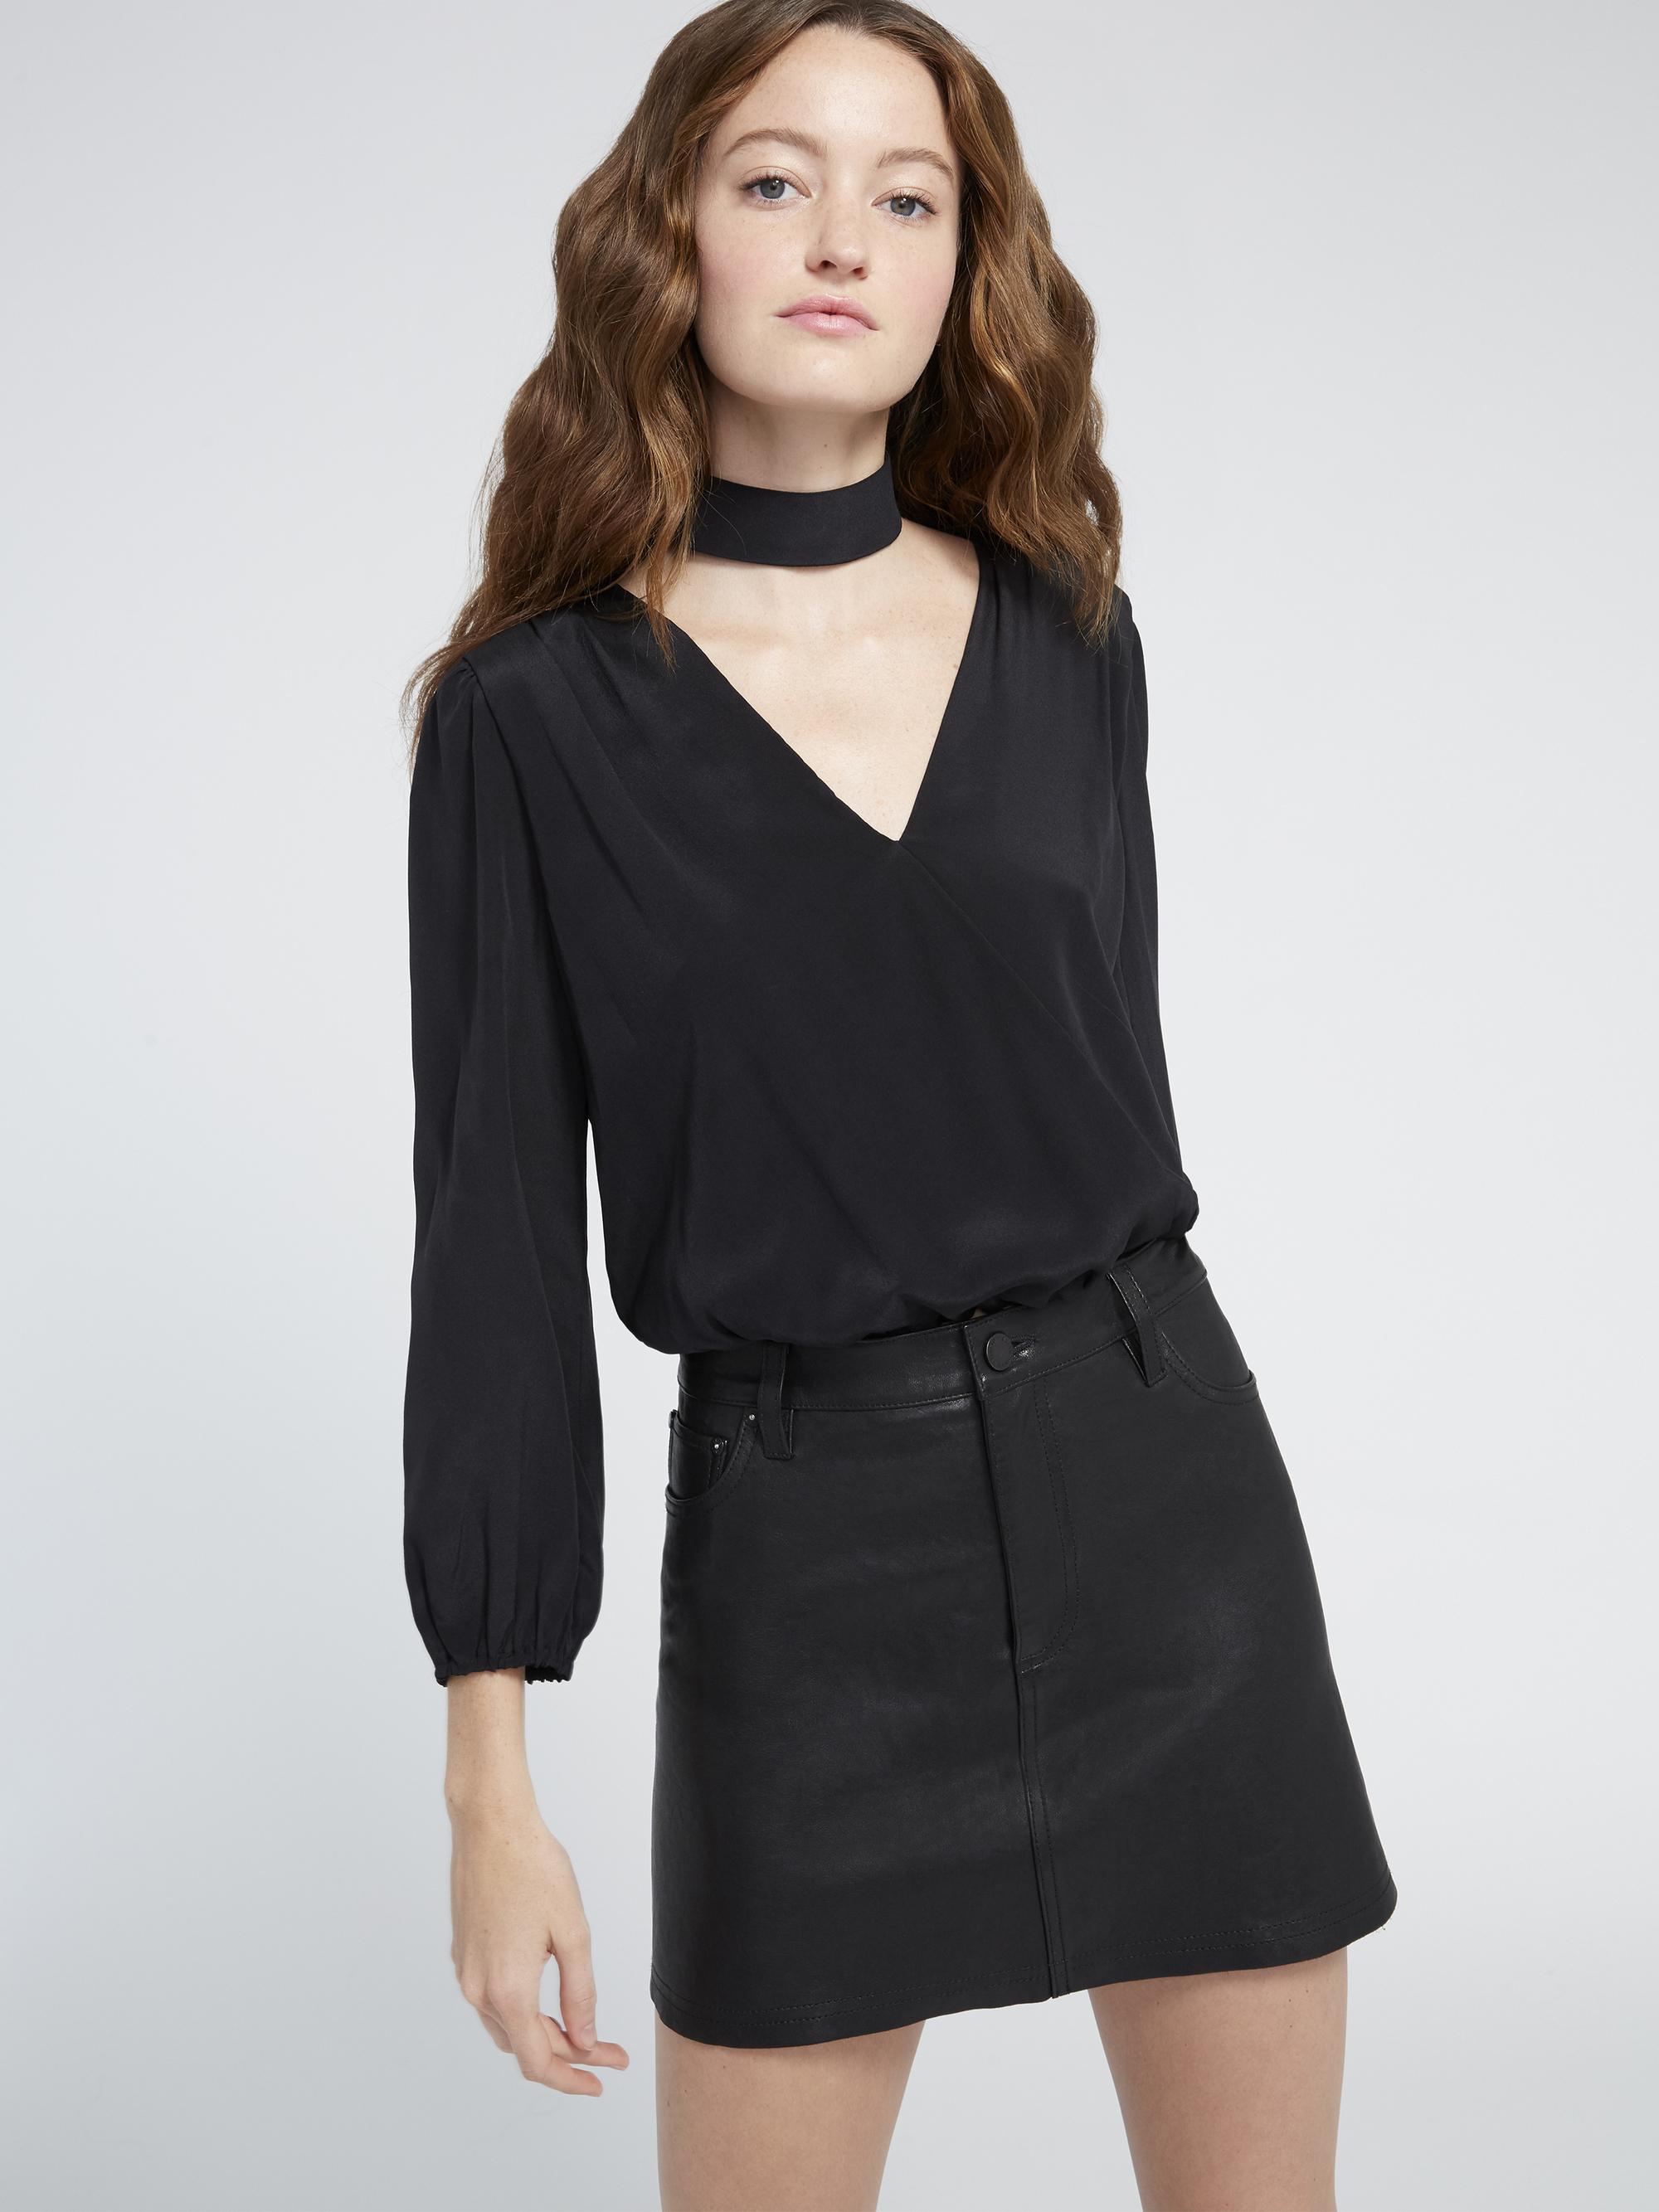 Alice + Olivia Silk Luba Blouson Sleeve Crop Top in Black - Lyst